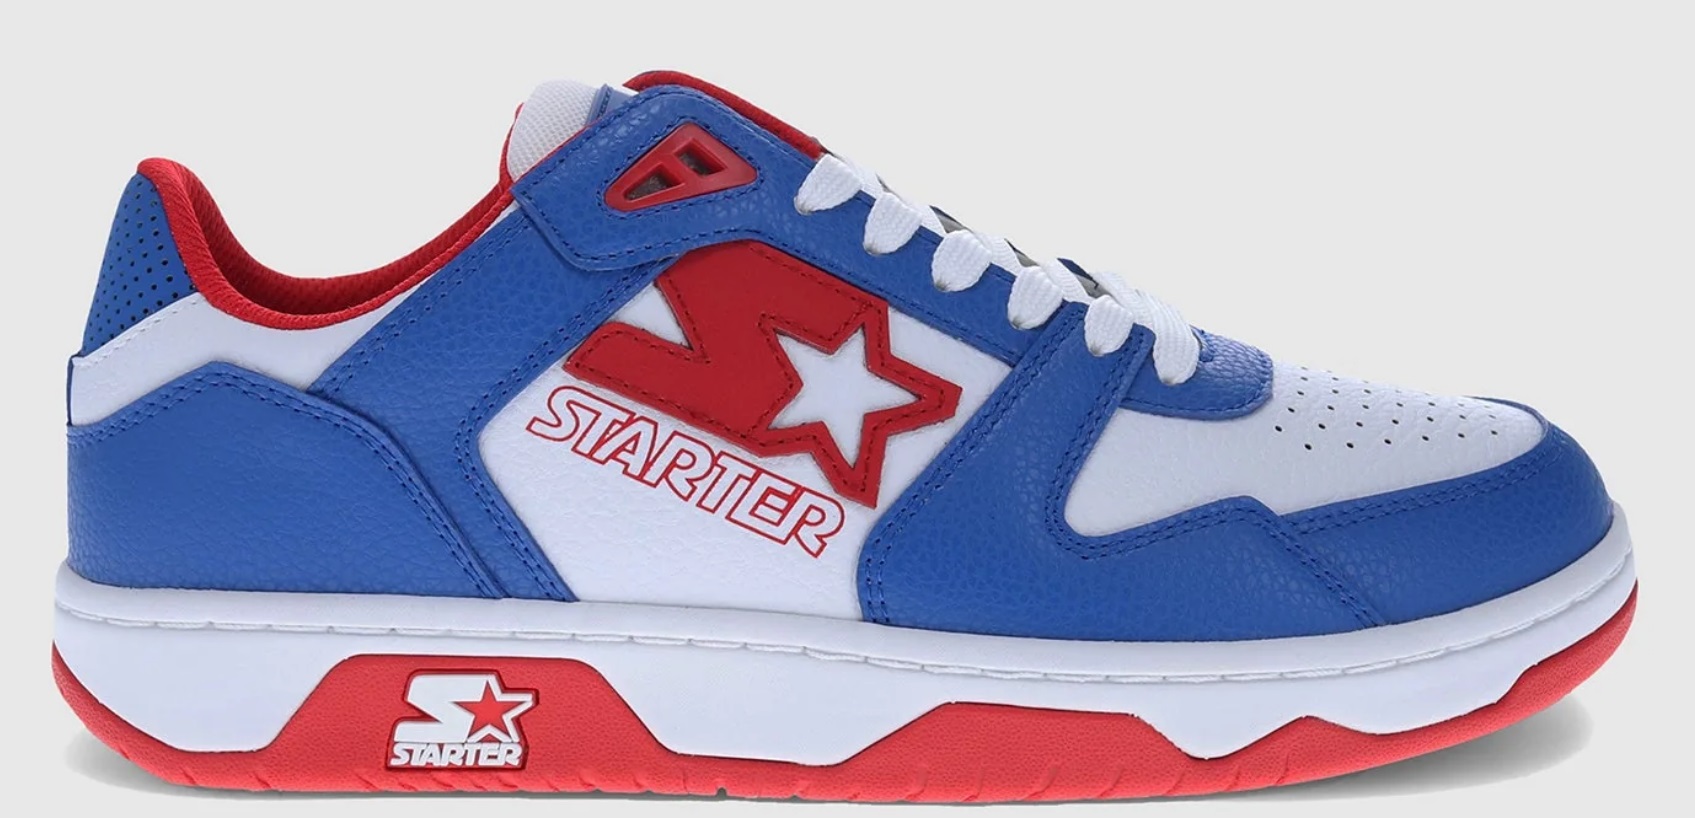 Starter Mens Breakaway Low Sneaker, Adult, White/Blue, 8.5 M US - image 1 of 1